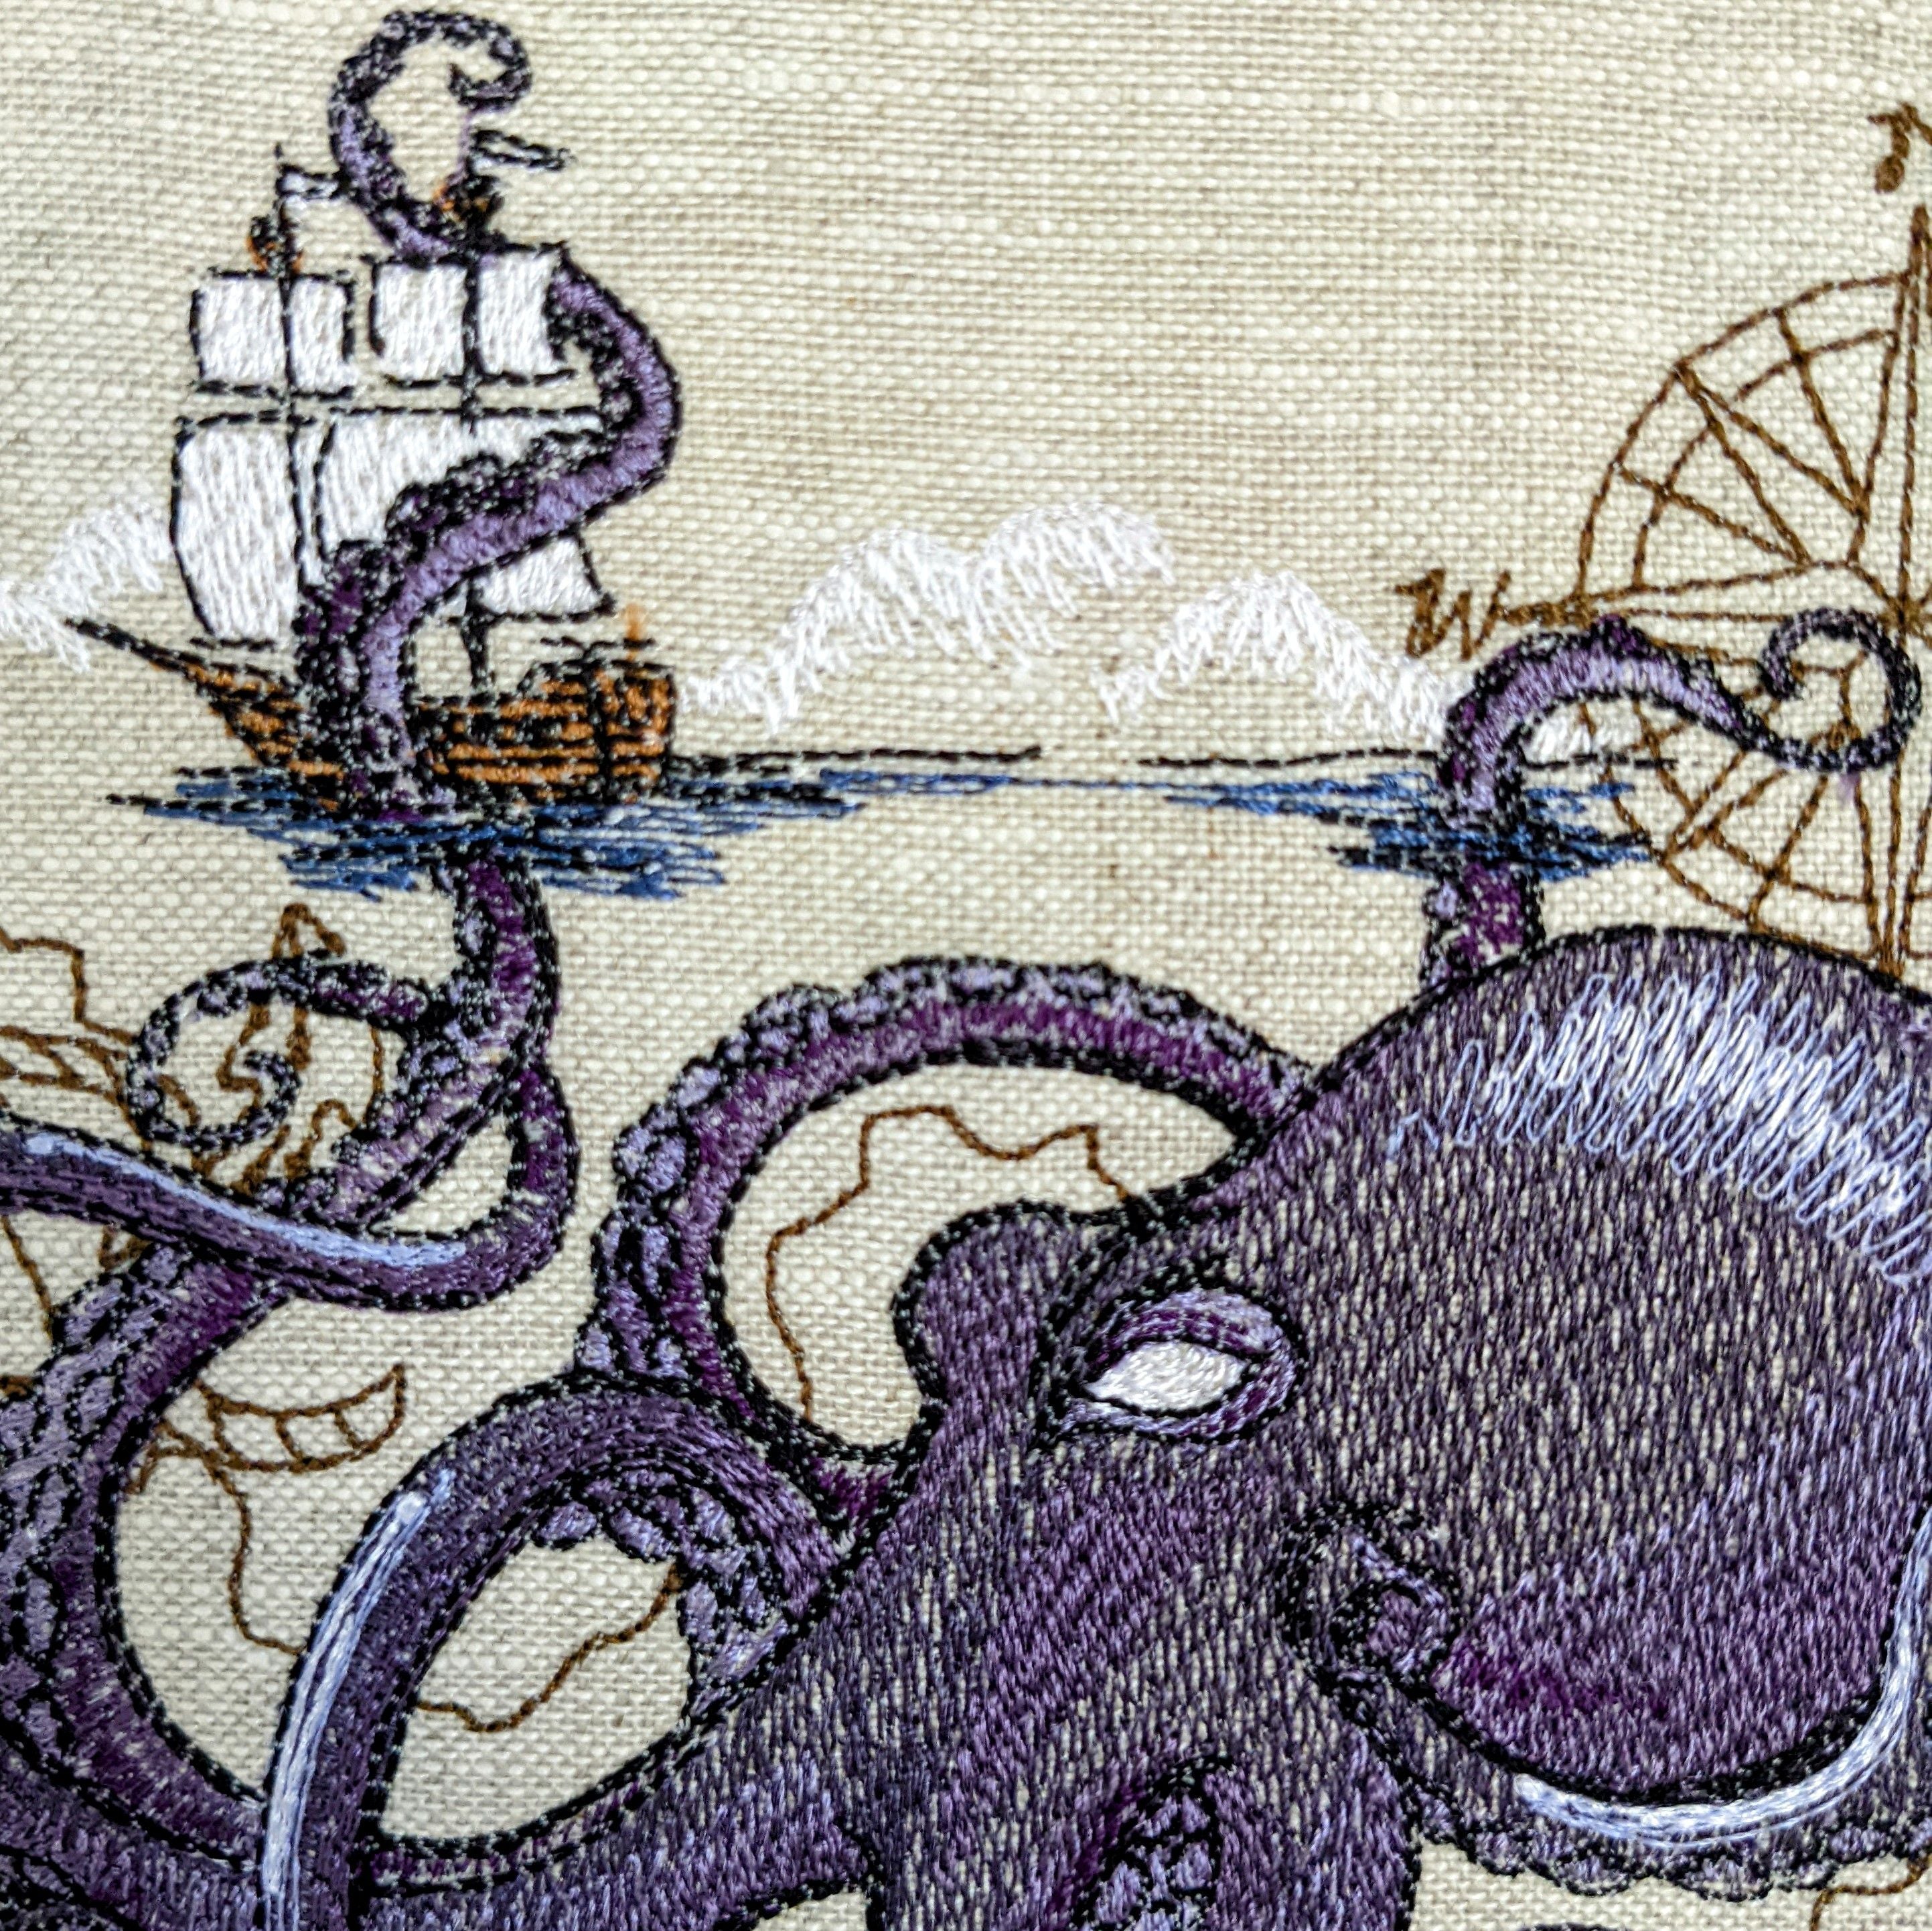 Kraken shipwreck scene embroidered onto natural linen, 8" hoop machine embroidery hoop art,